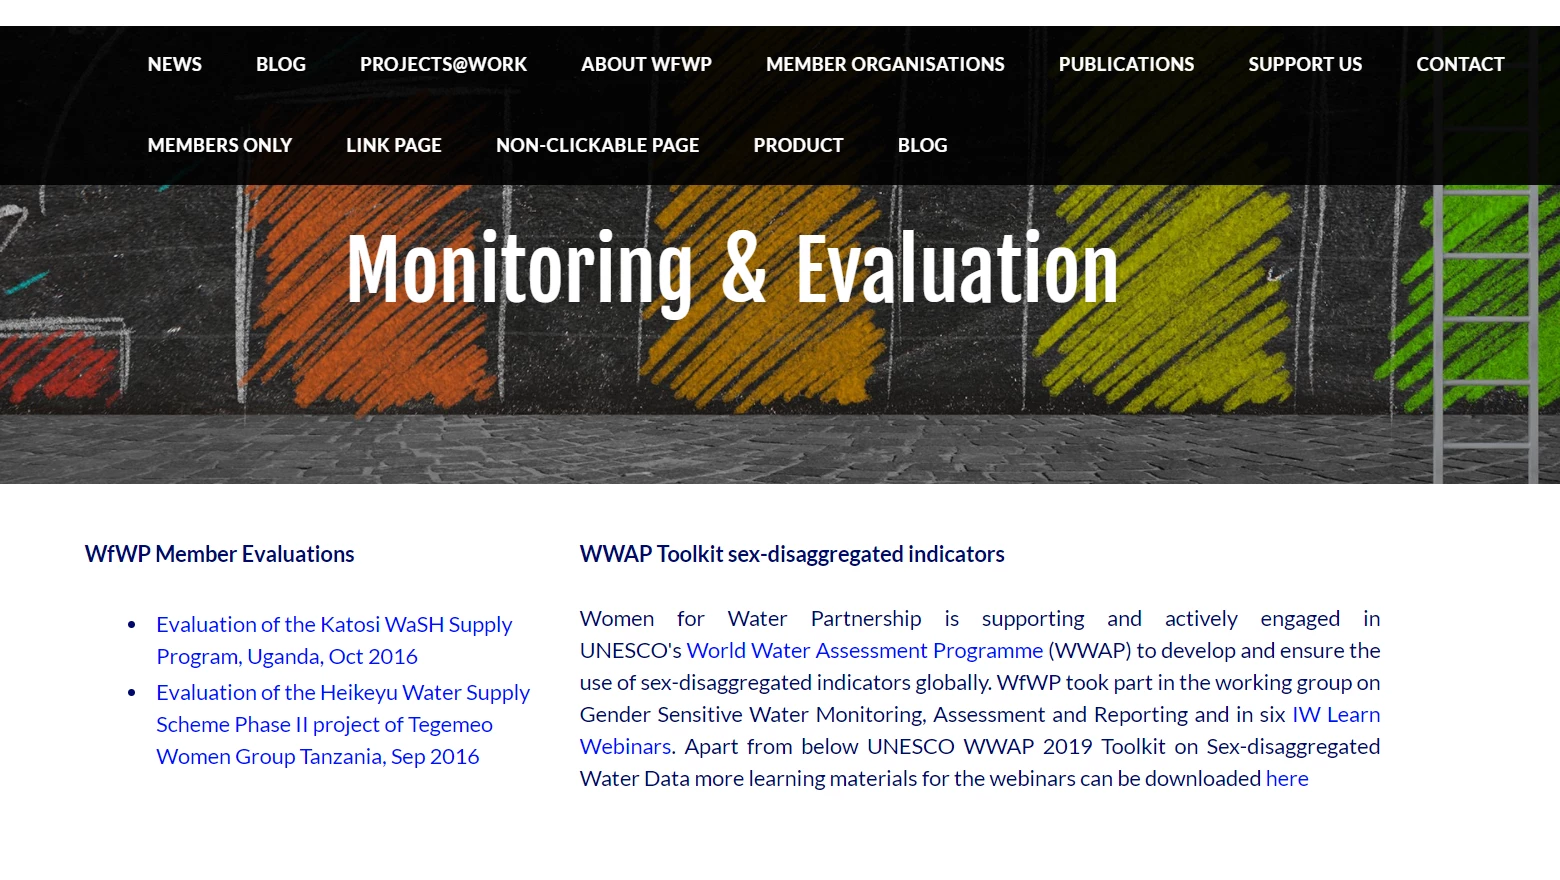 WWAP Gender Sensitive Water Monitoring, Assessment and Reporting